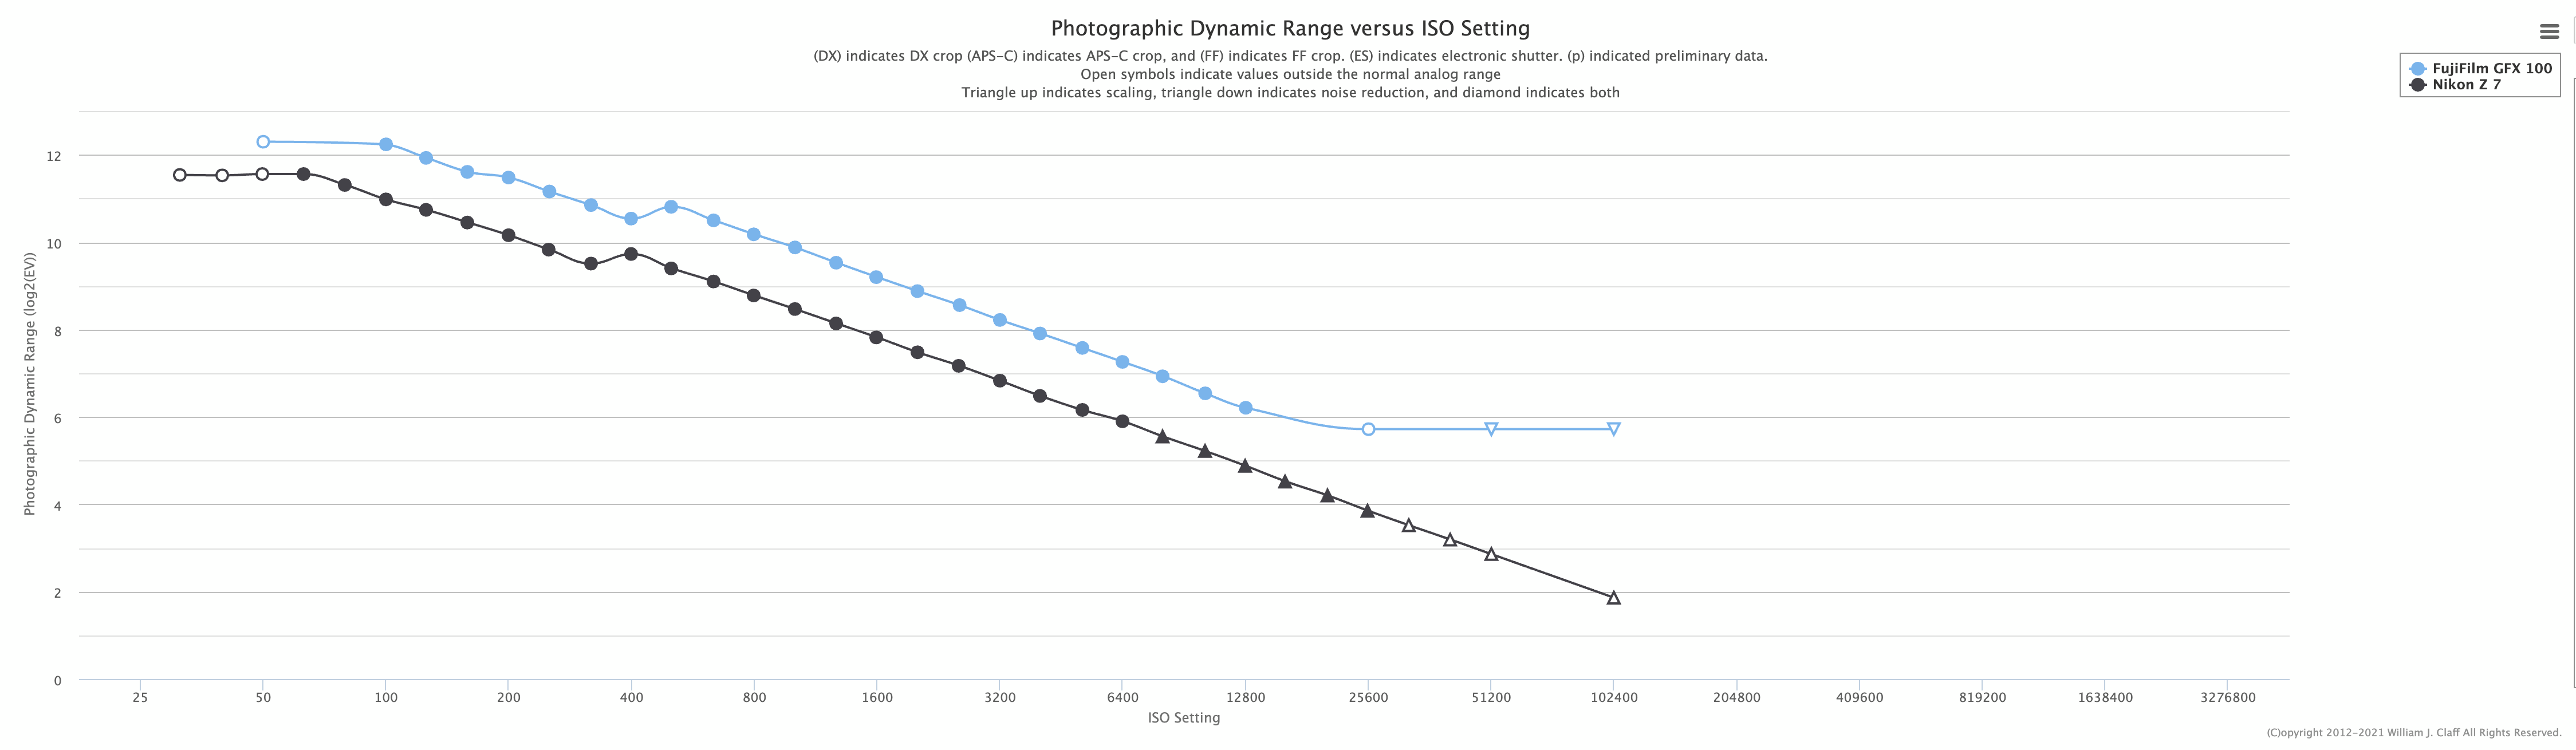 Photographic Dynamic Range Vs ISO Setting